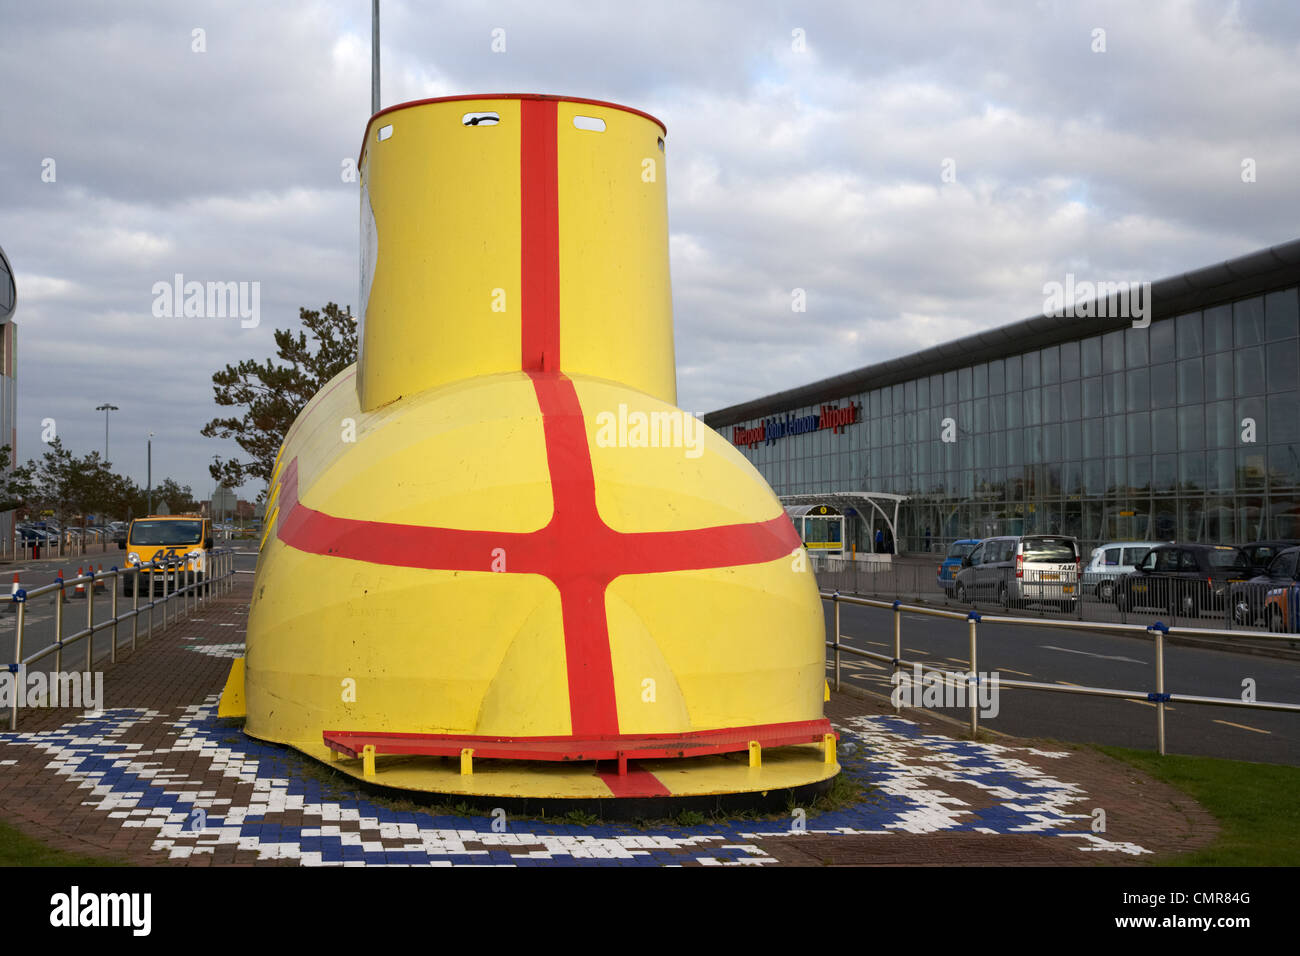 the beatles yellow submarine sculpture outside liverpool john lennon airport merseyside uk. Stock Photo